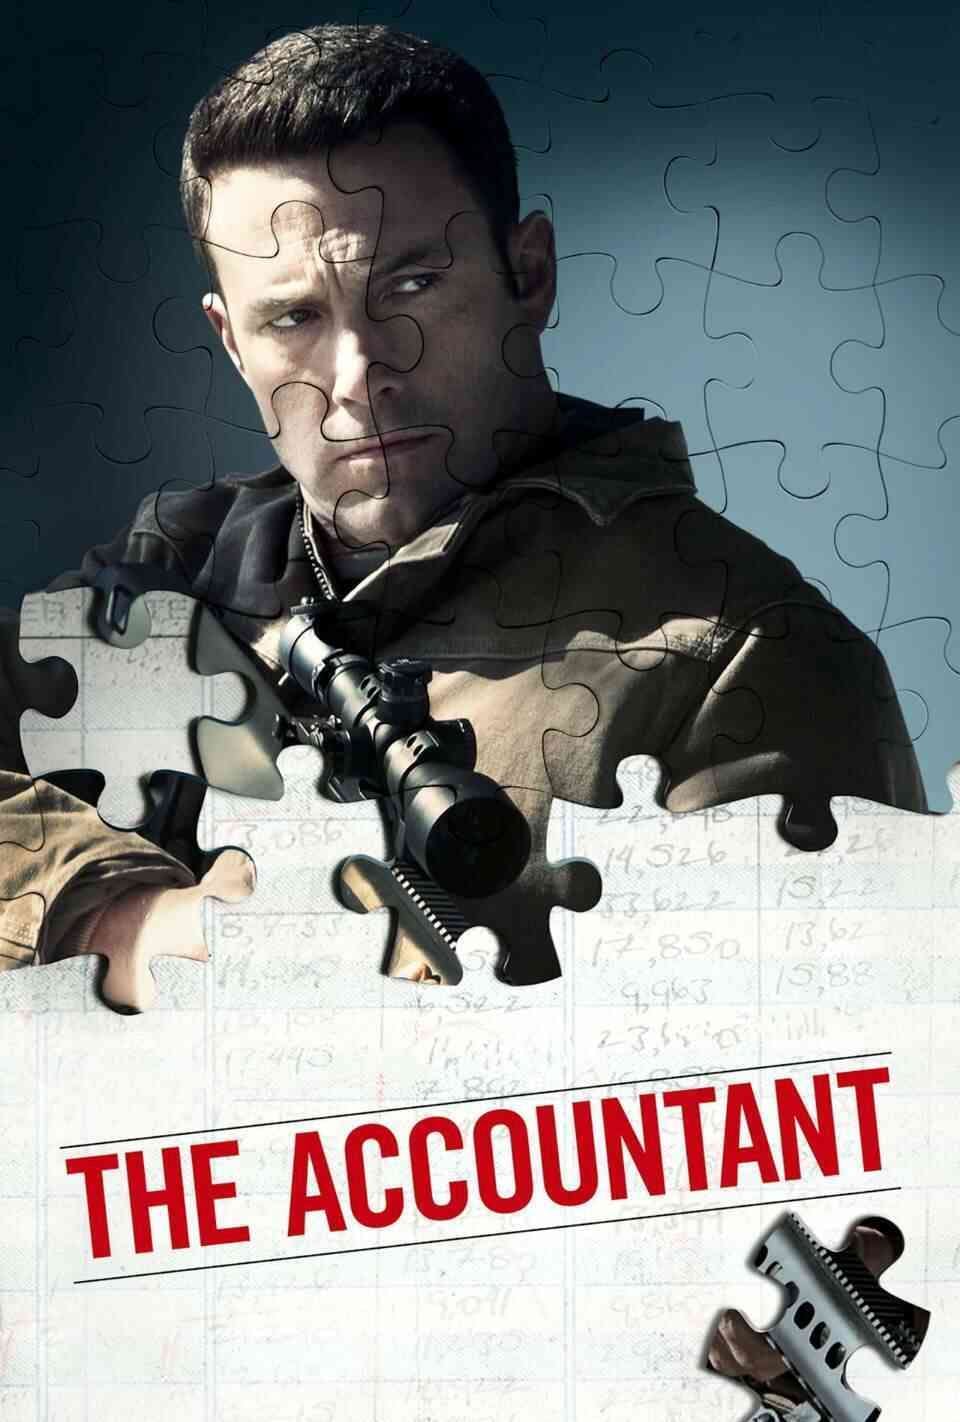 Read The Accountant screenplay.